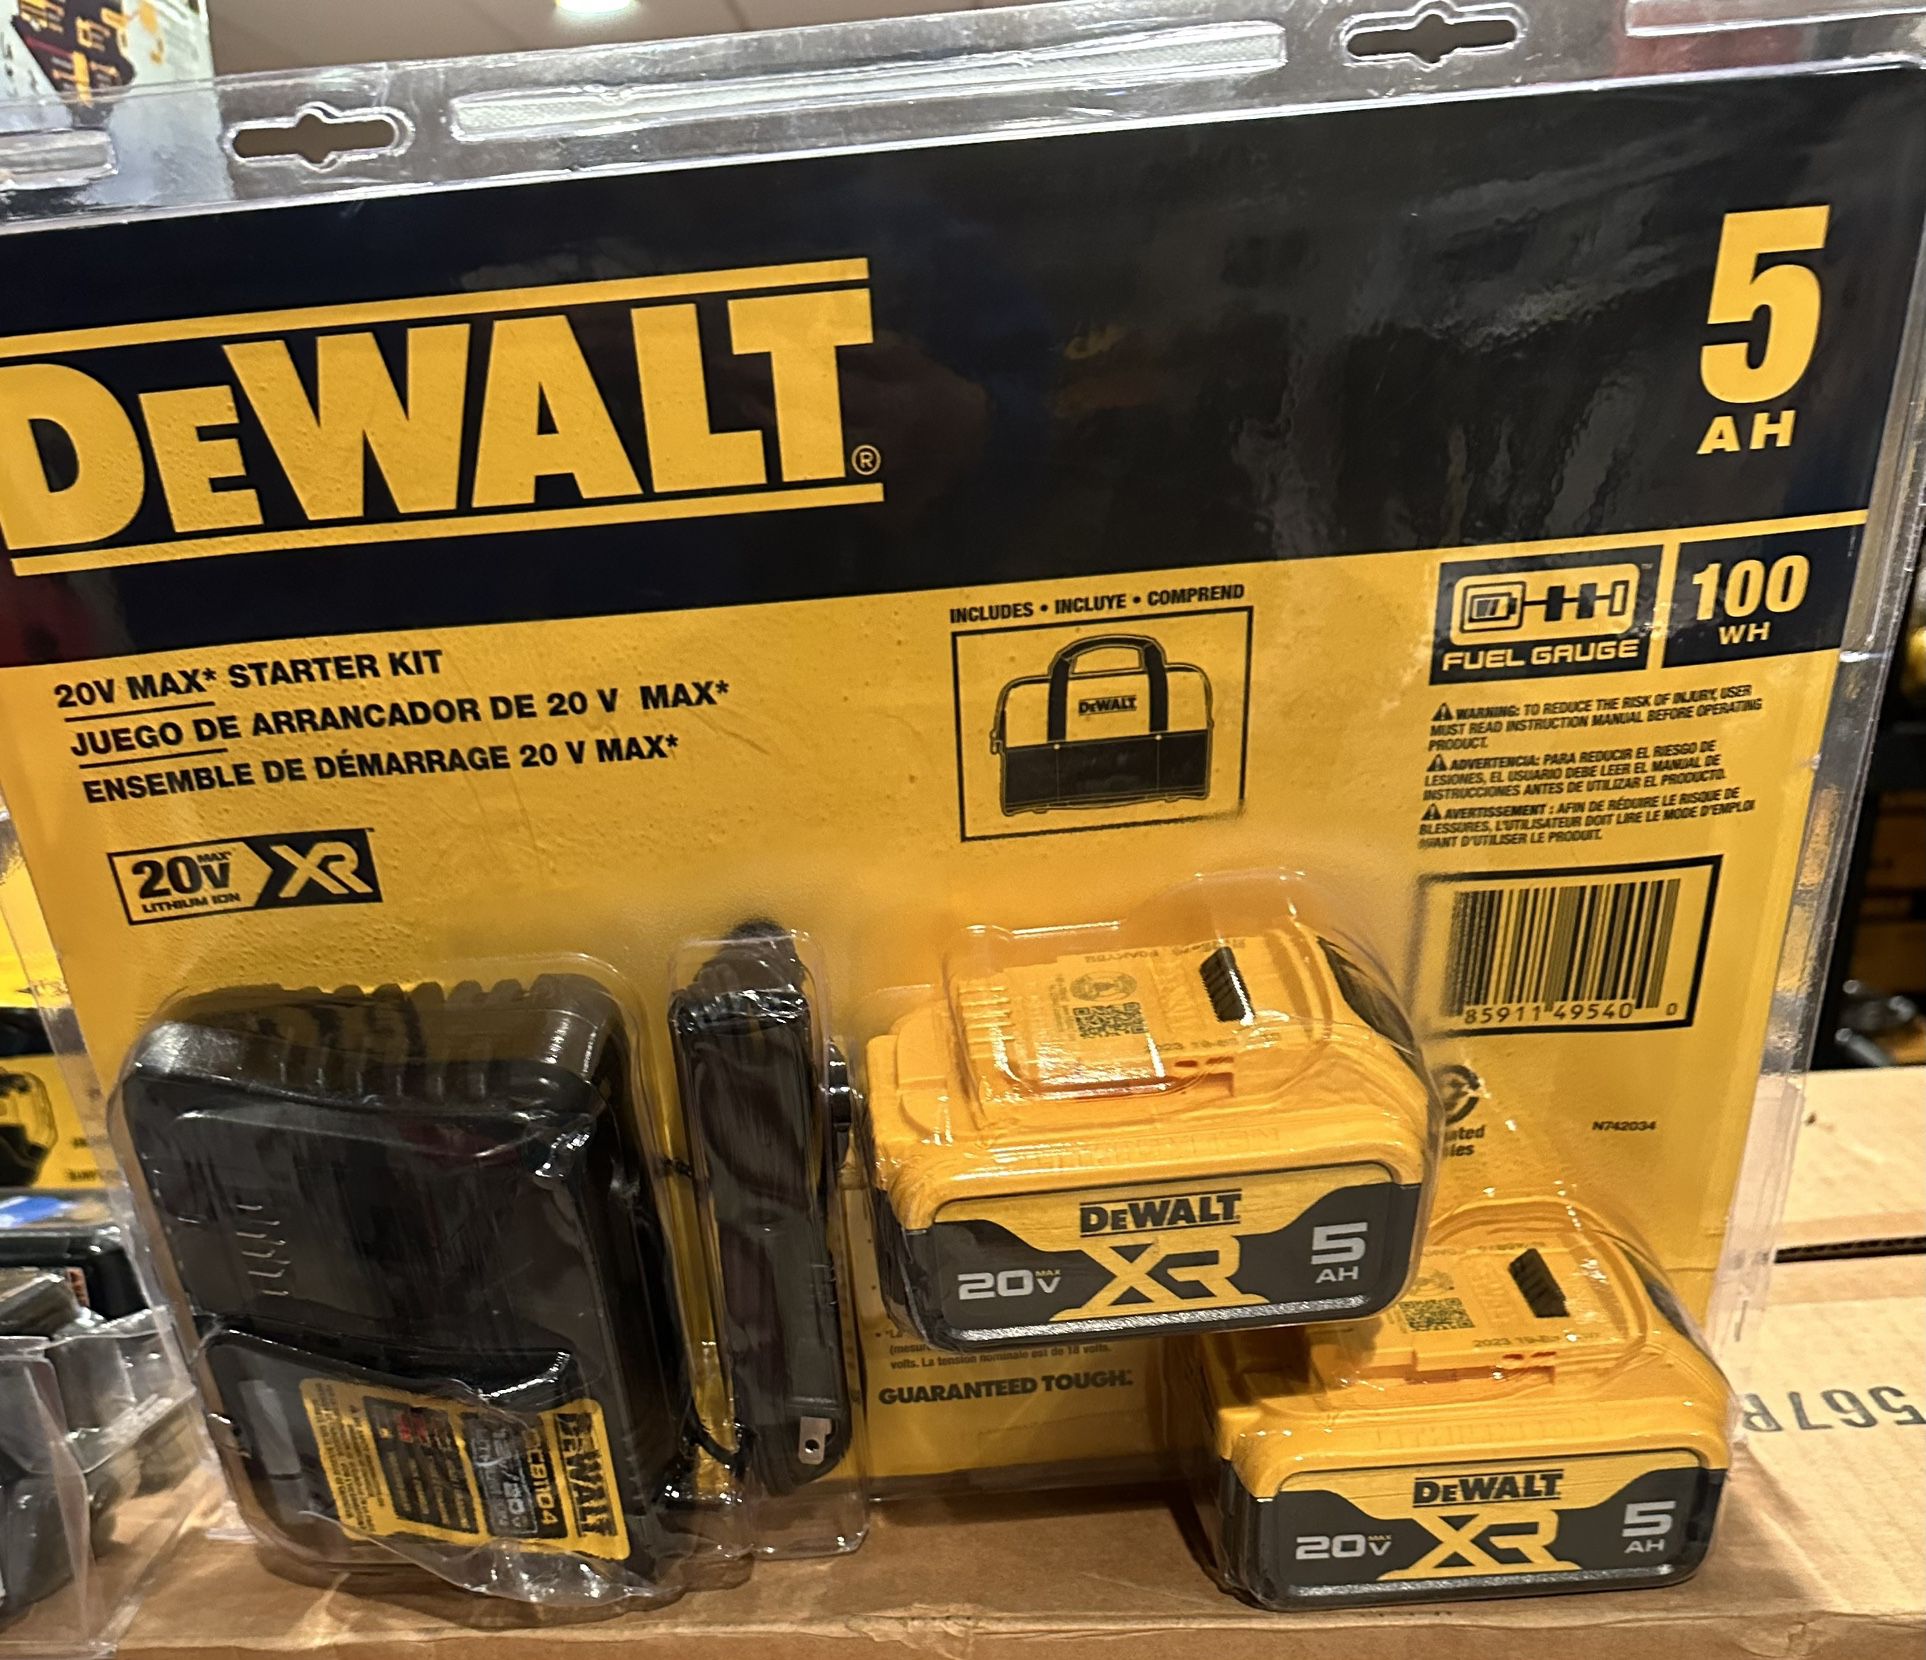 DEWALT 20V MAX XR Premium Lithium-lon 5.0Ah Battery Pack (2 Pack), Charger and Kit Bag